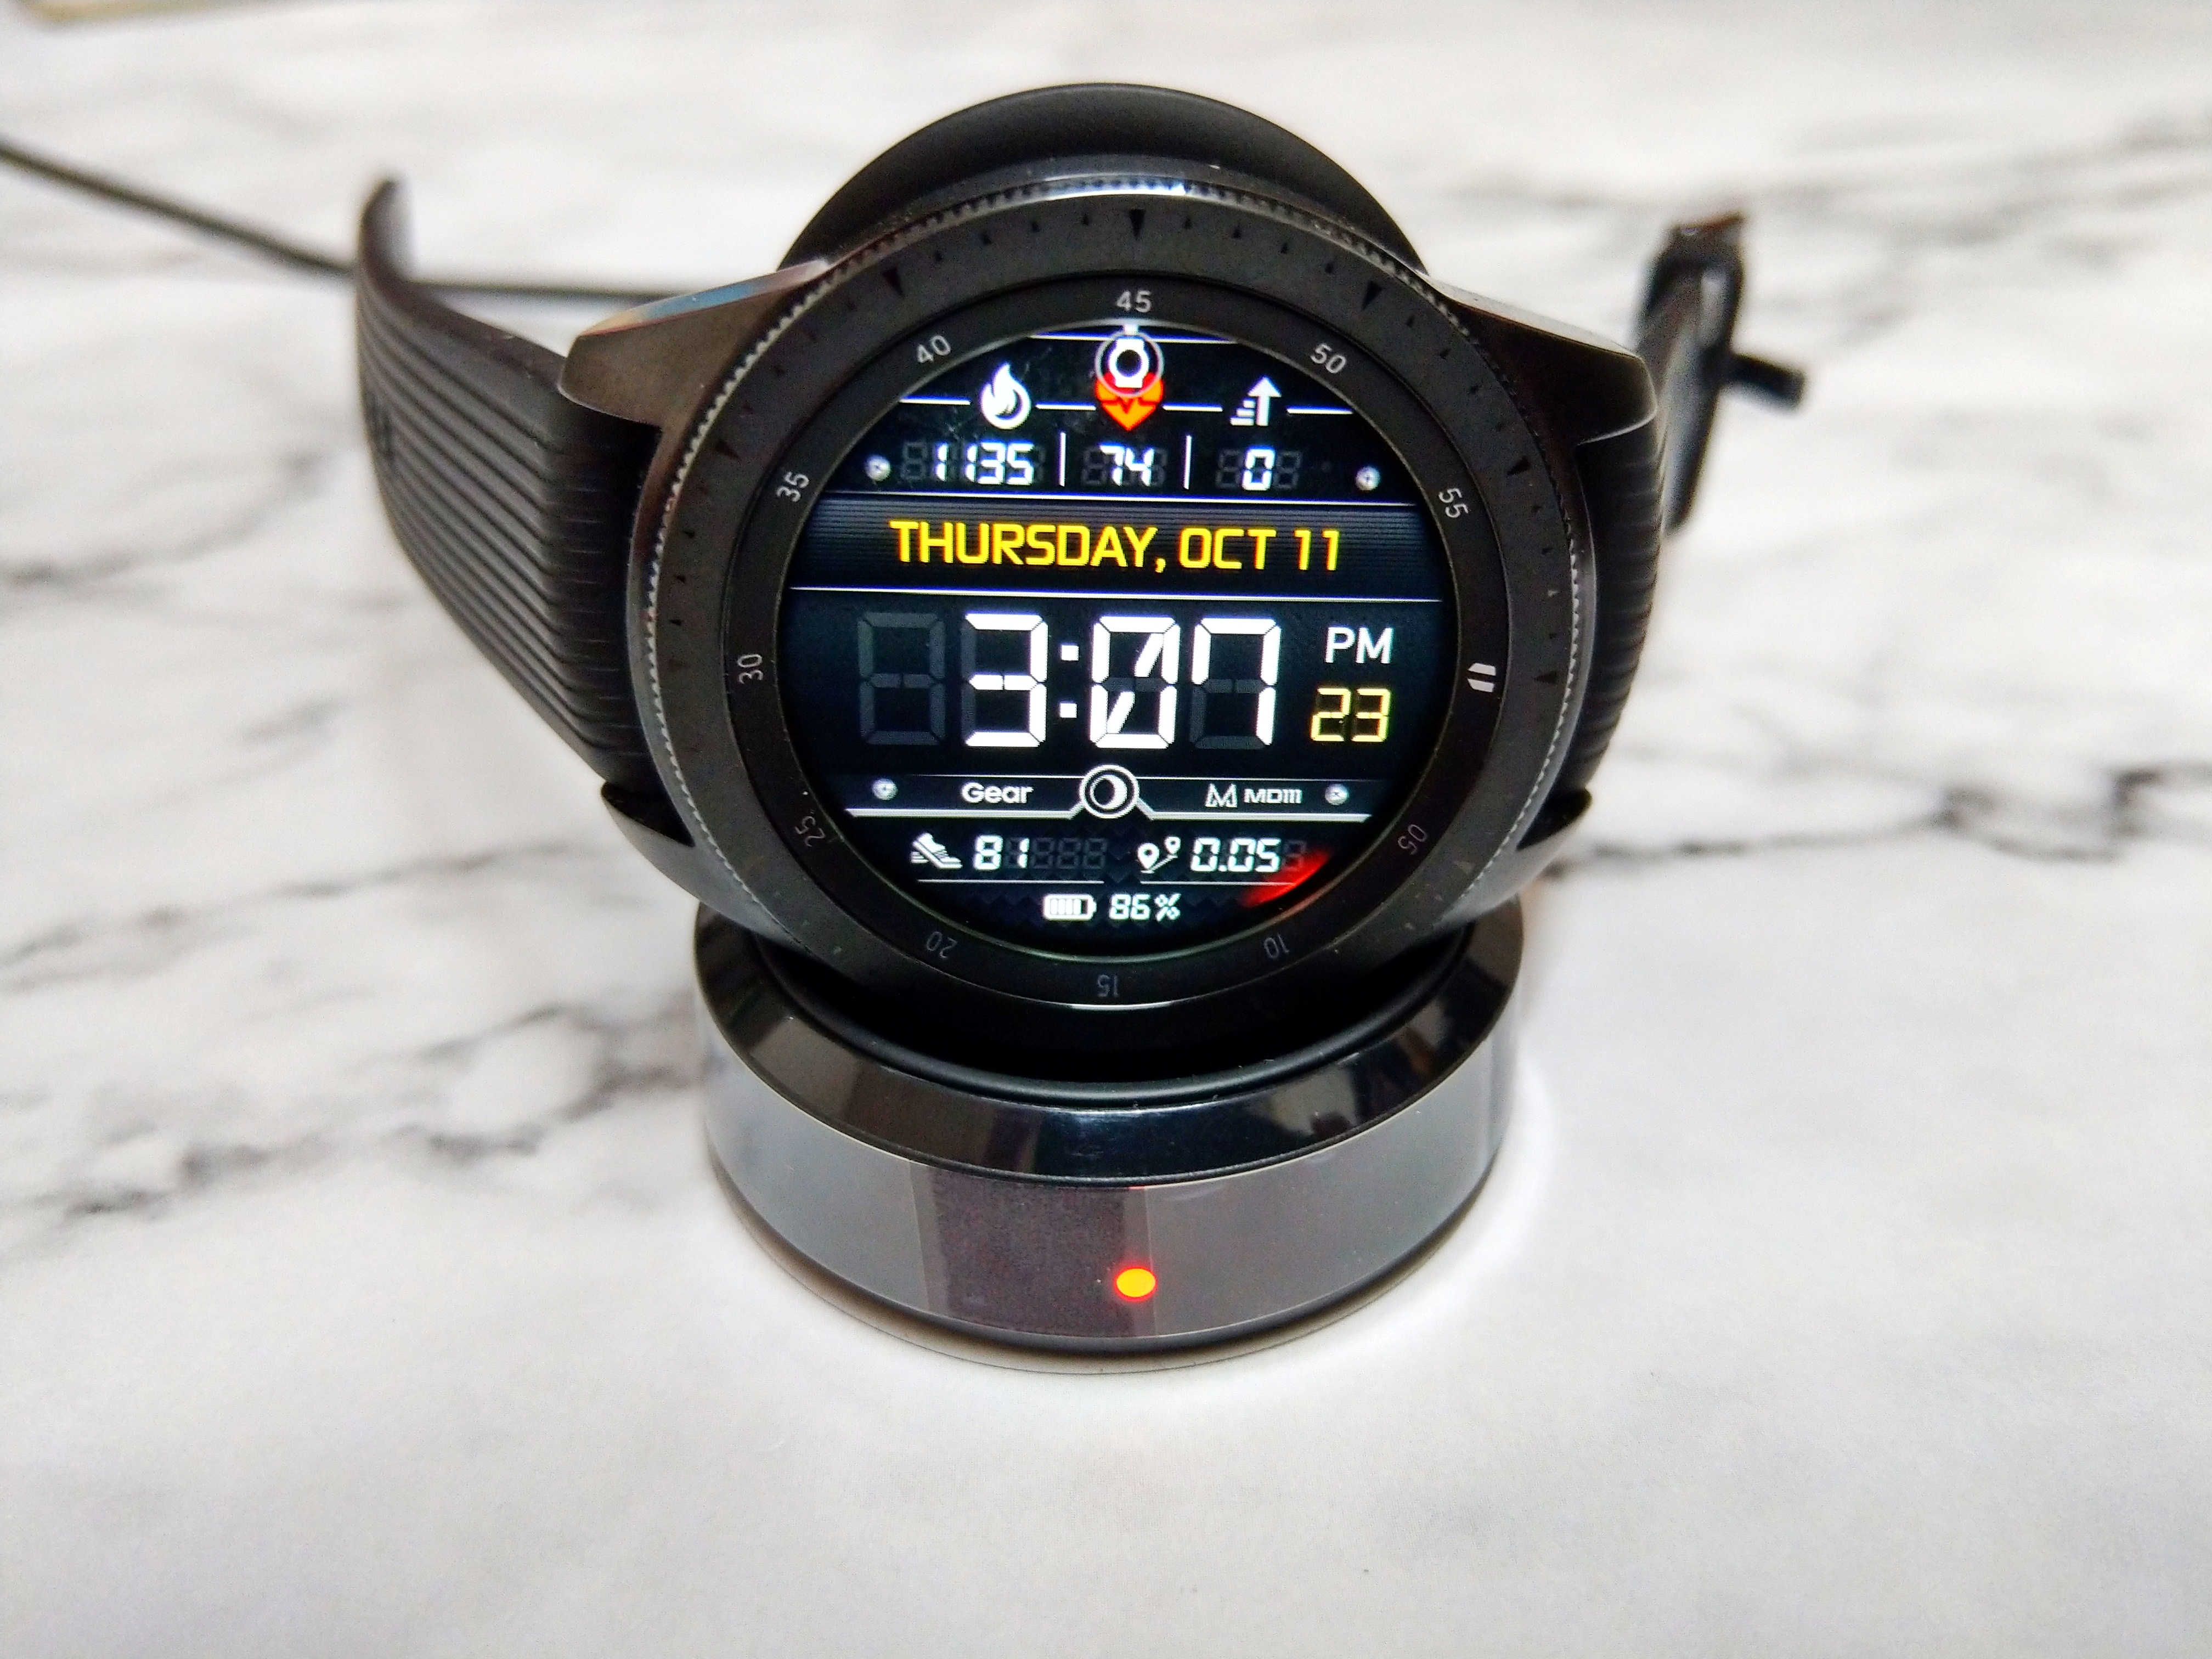 Samsung Galaxy Watch開箱試用 - 完美錶現生活全控 - samsung s9 - 科技生活 - teXch